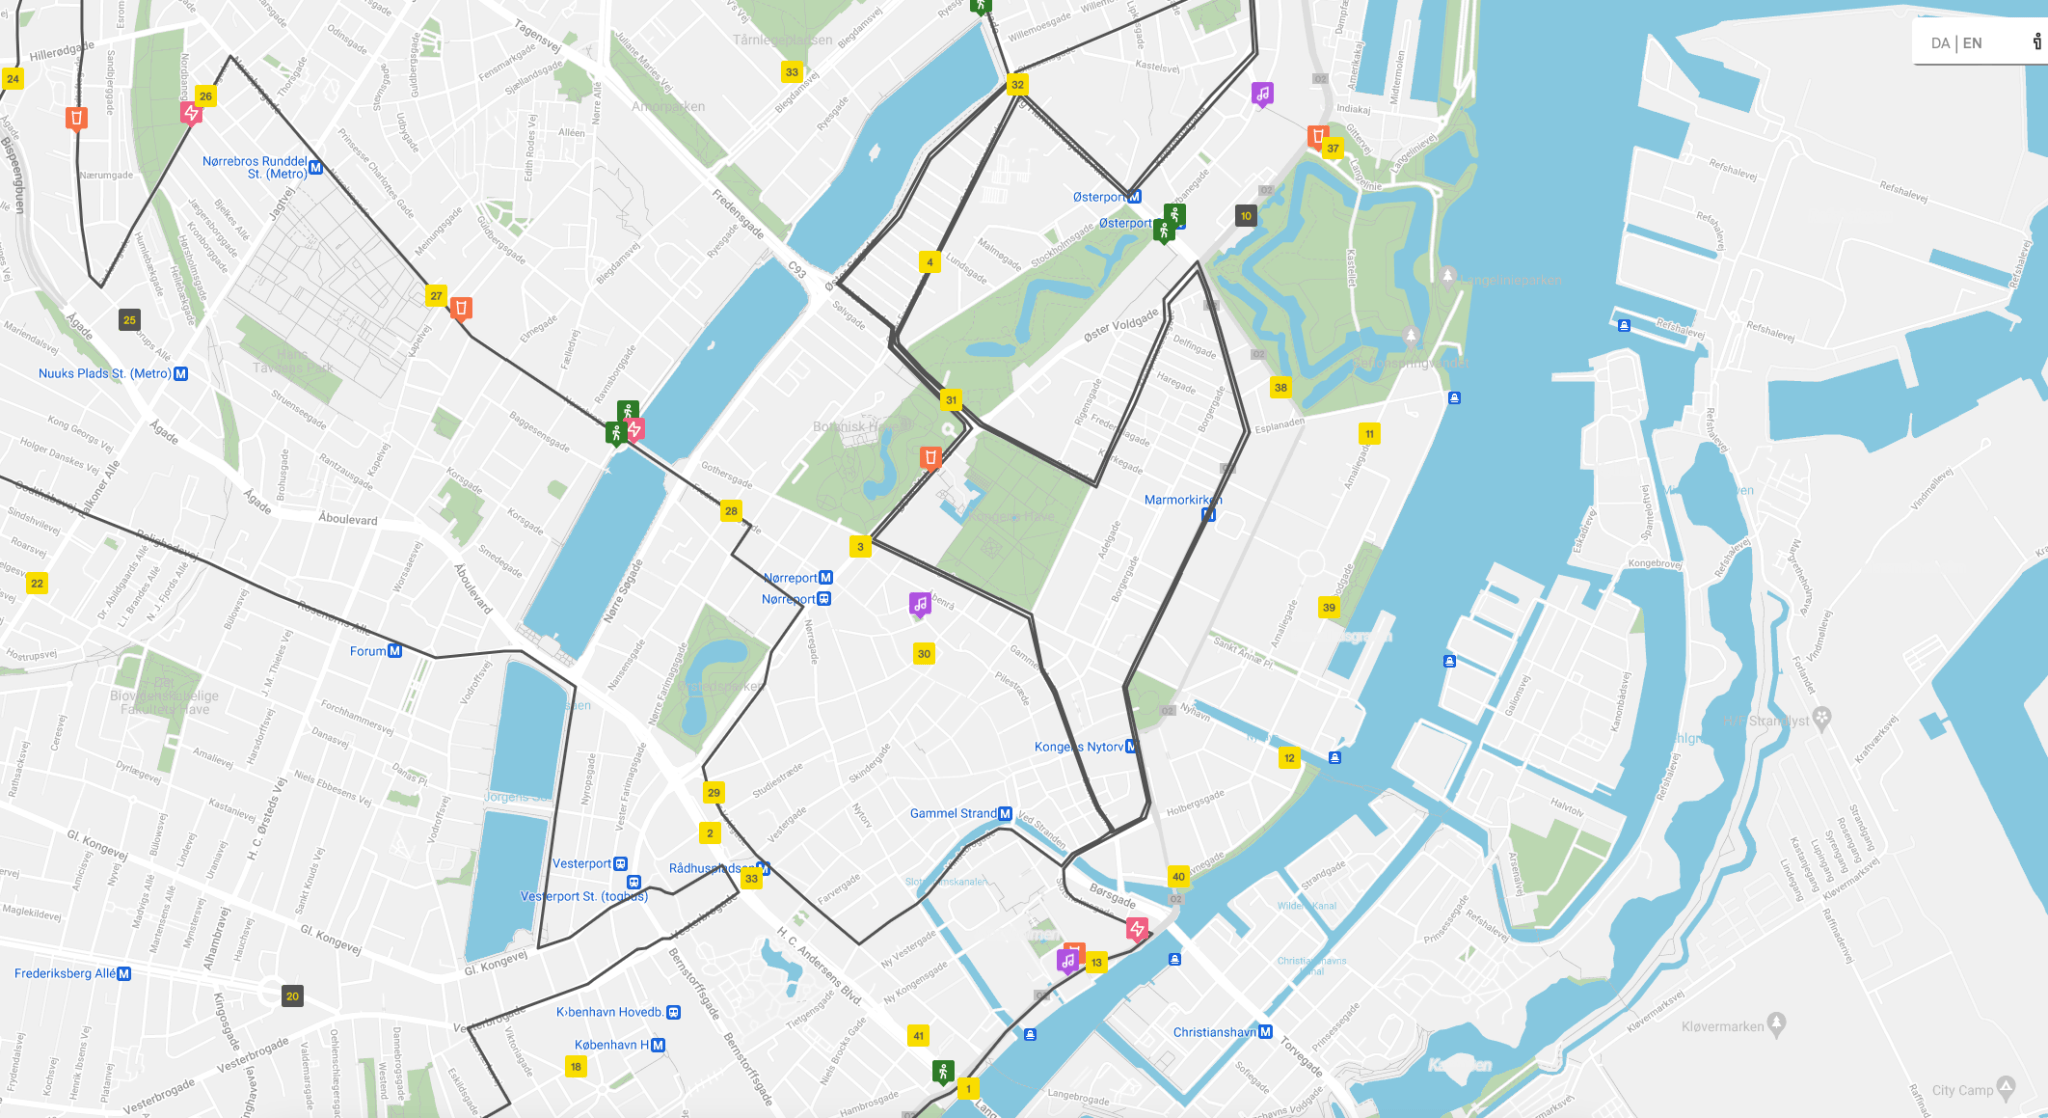 Copenhagen Marathon to disrupt traffic this Sunday